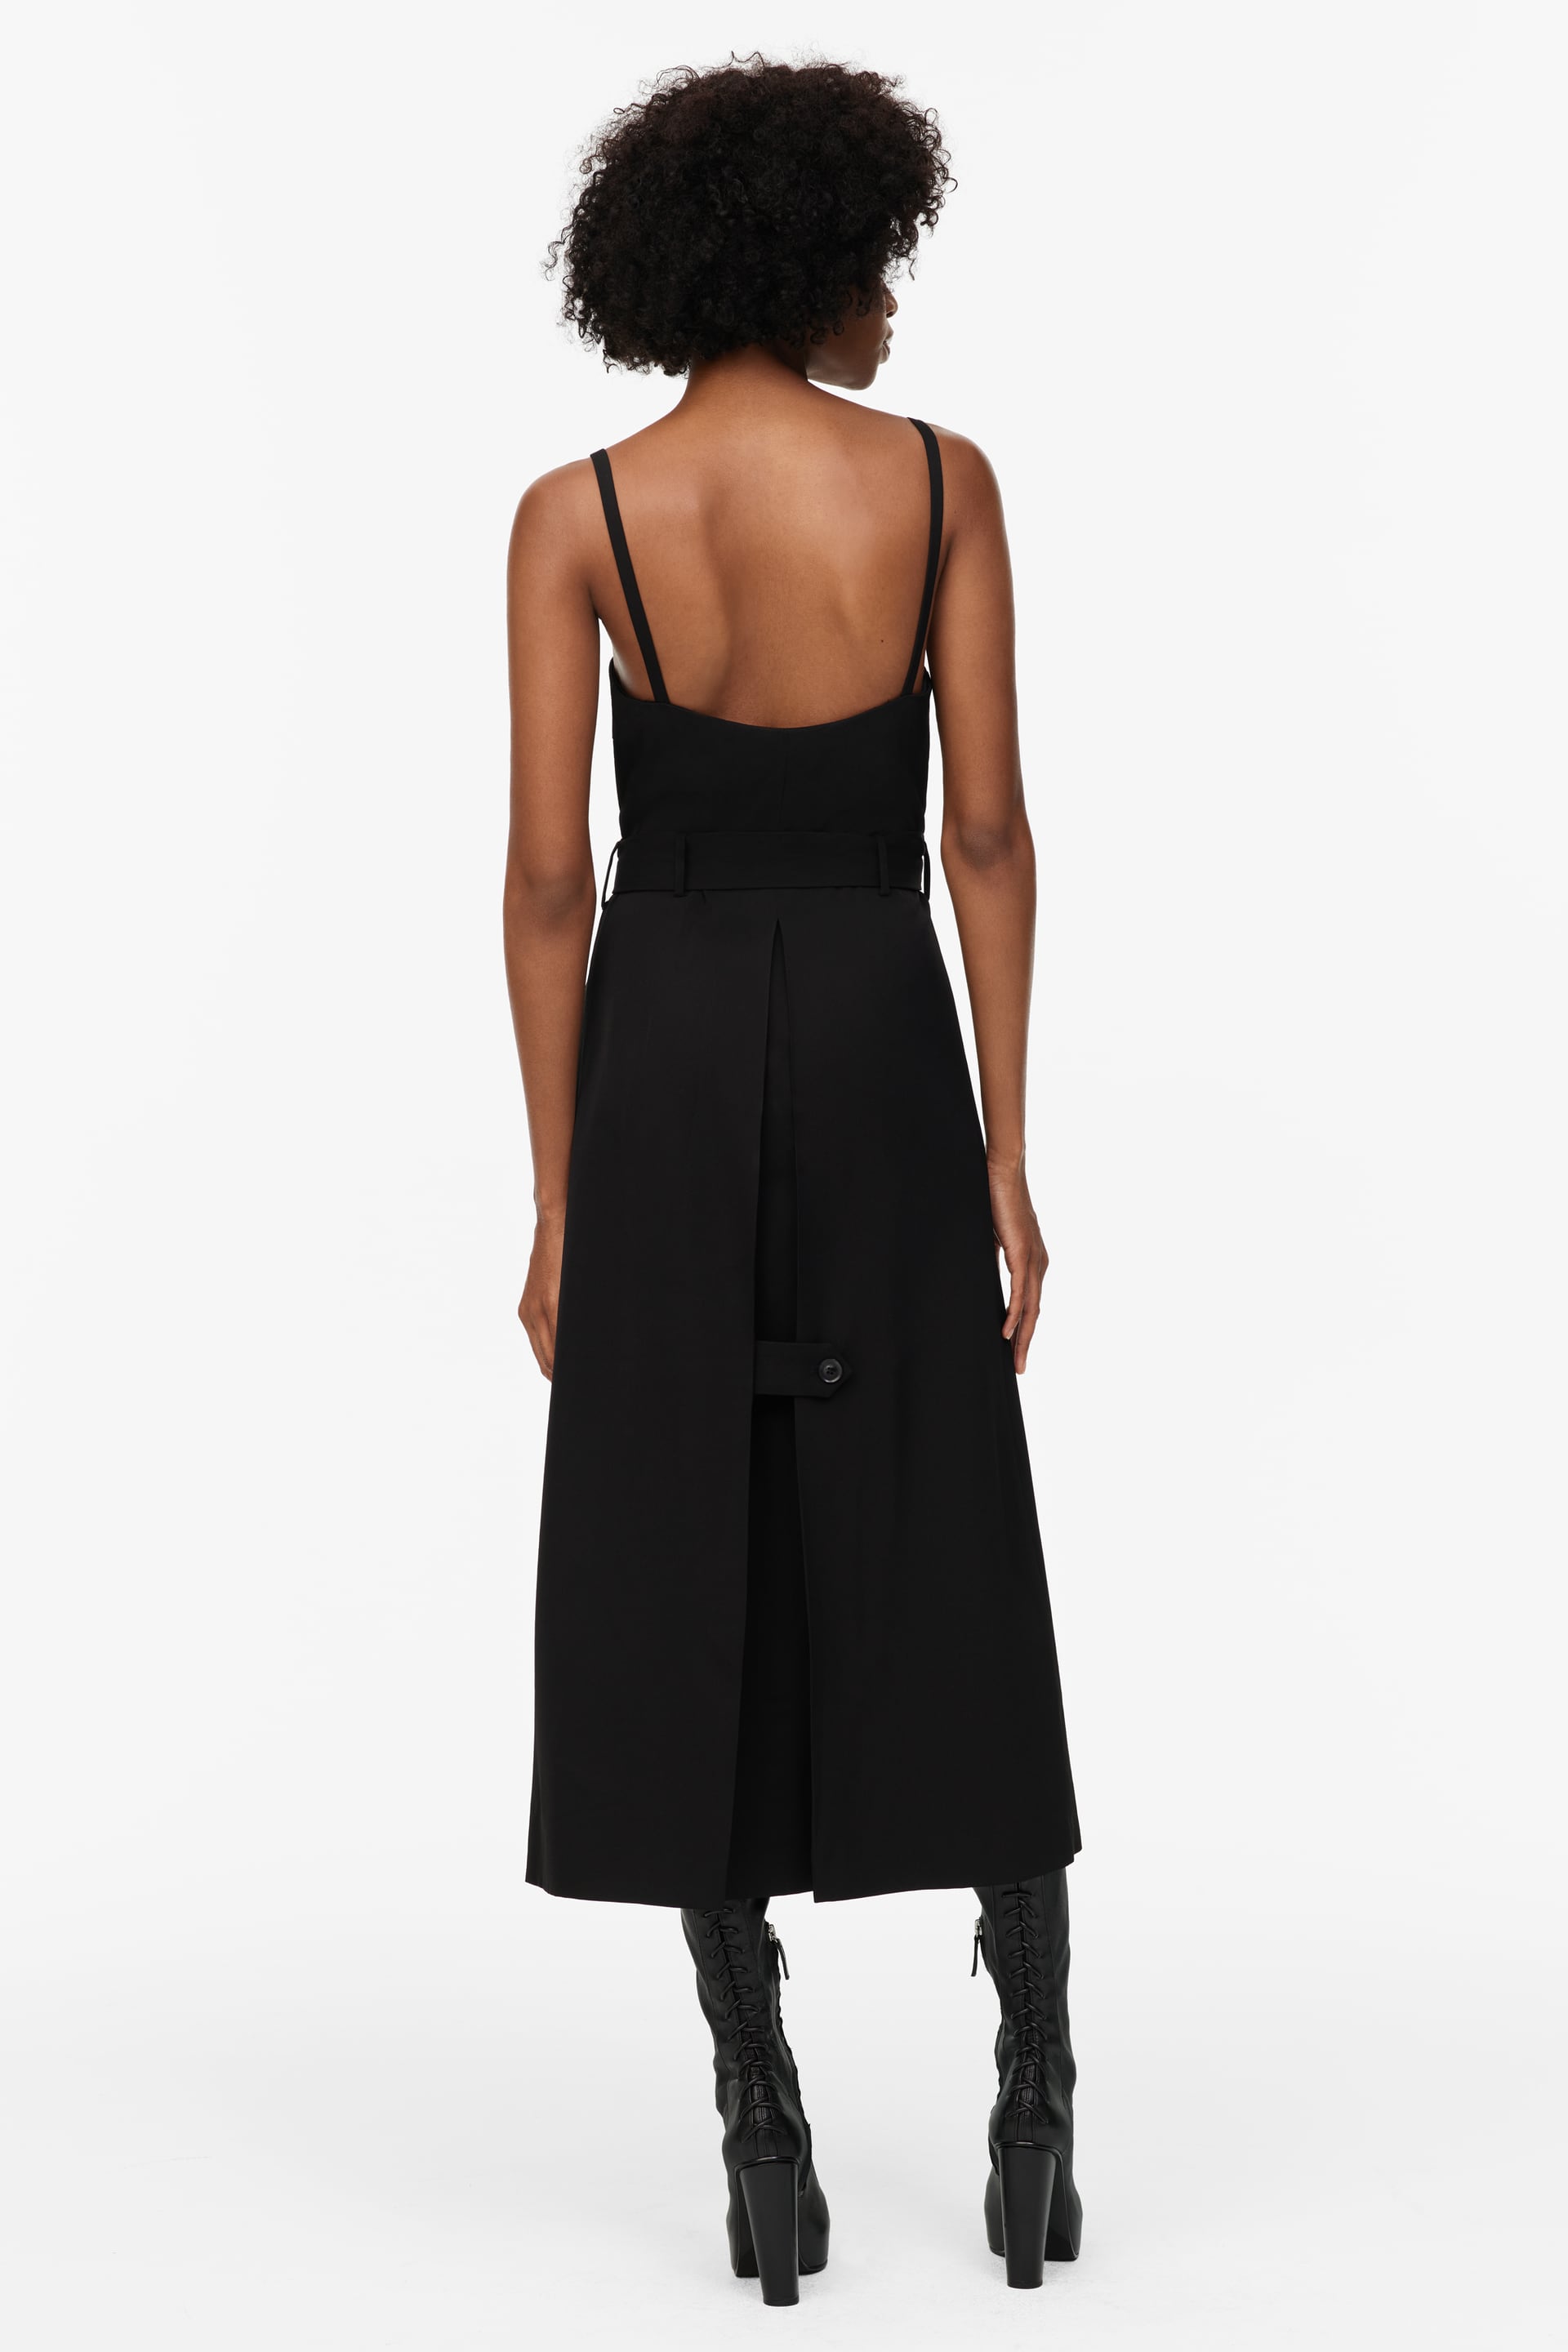 Zara - satin effect slip dress black